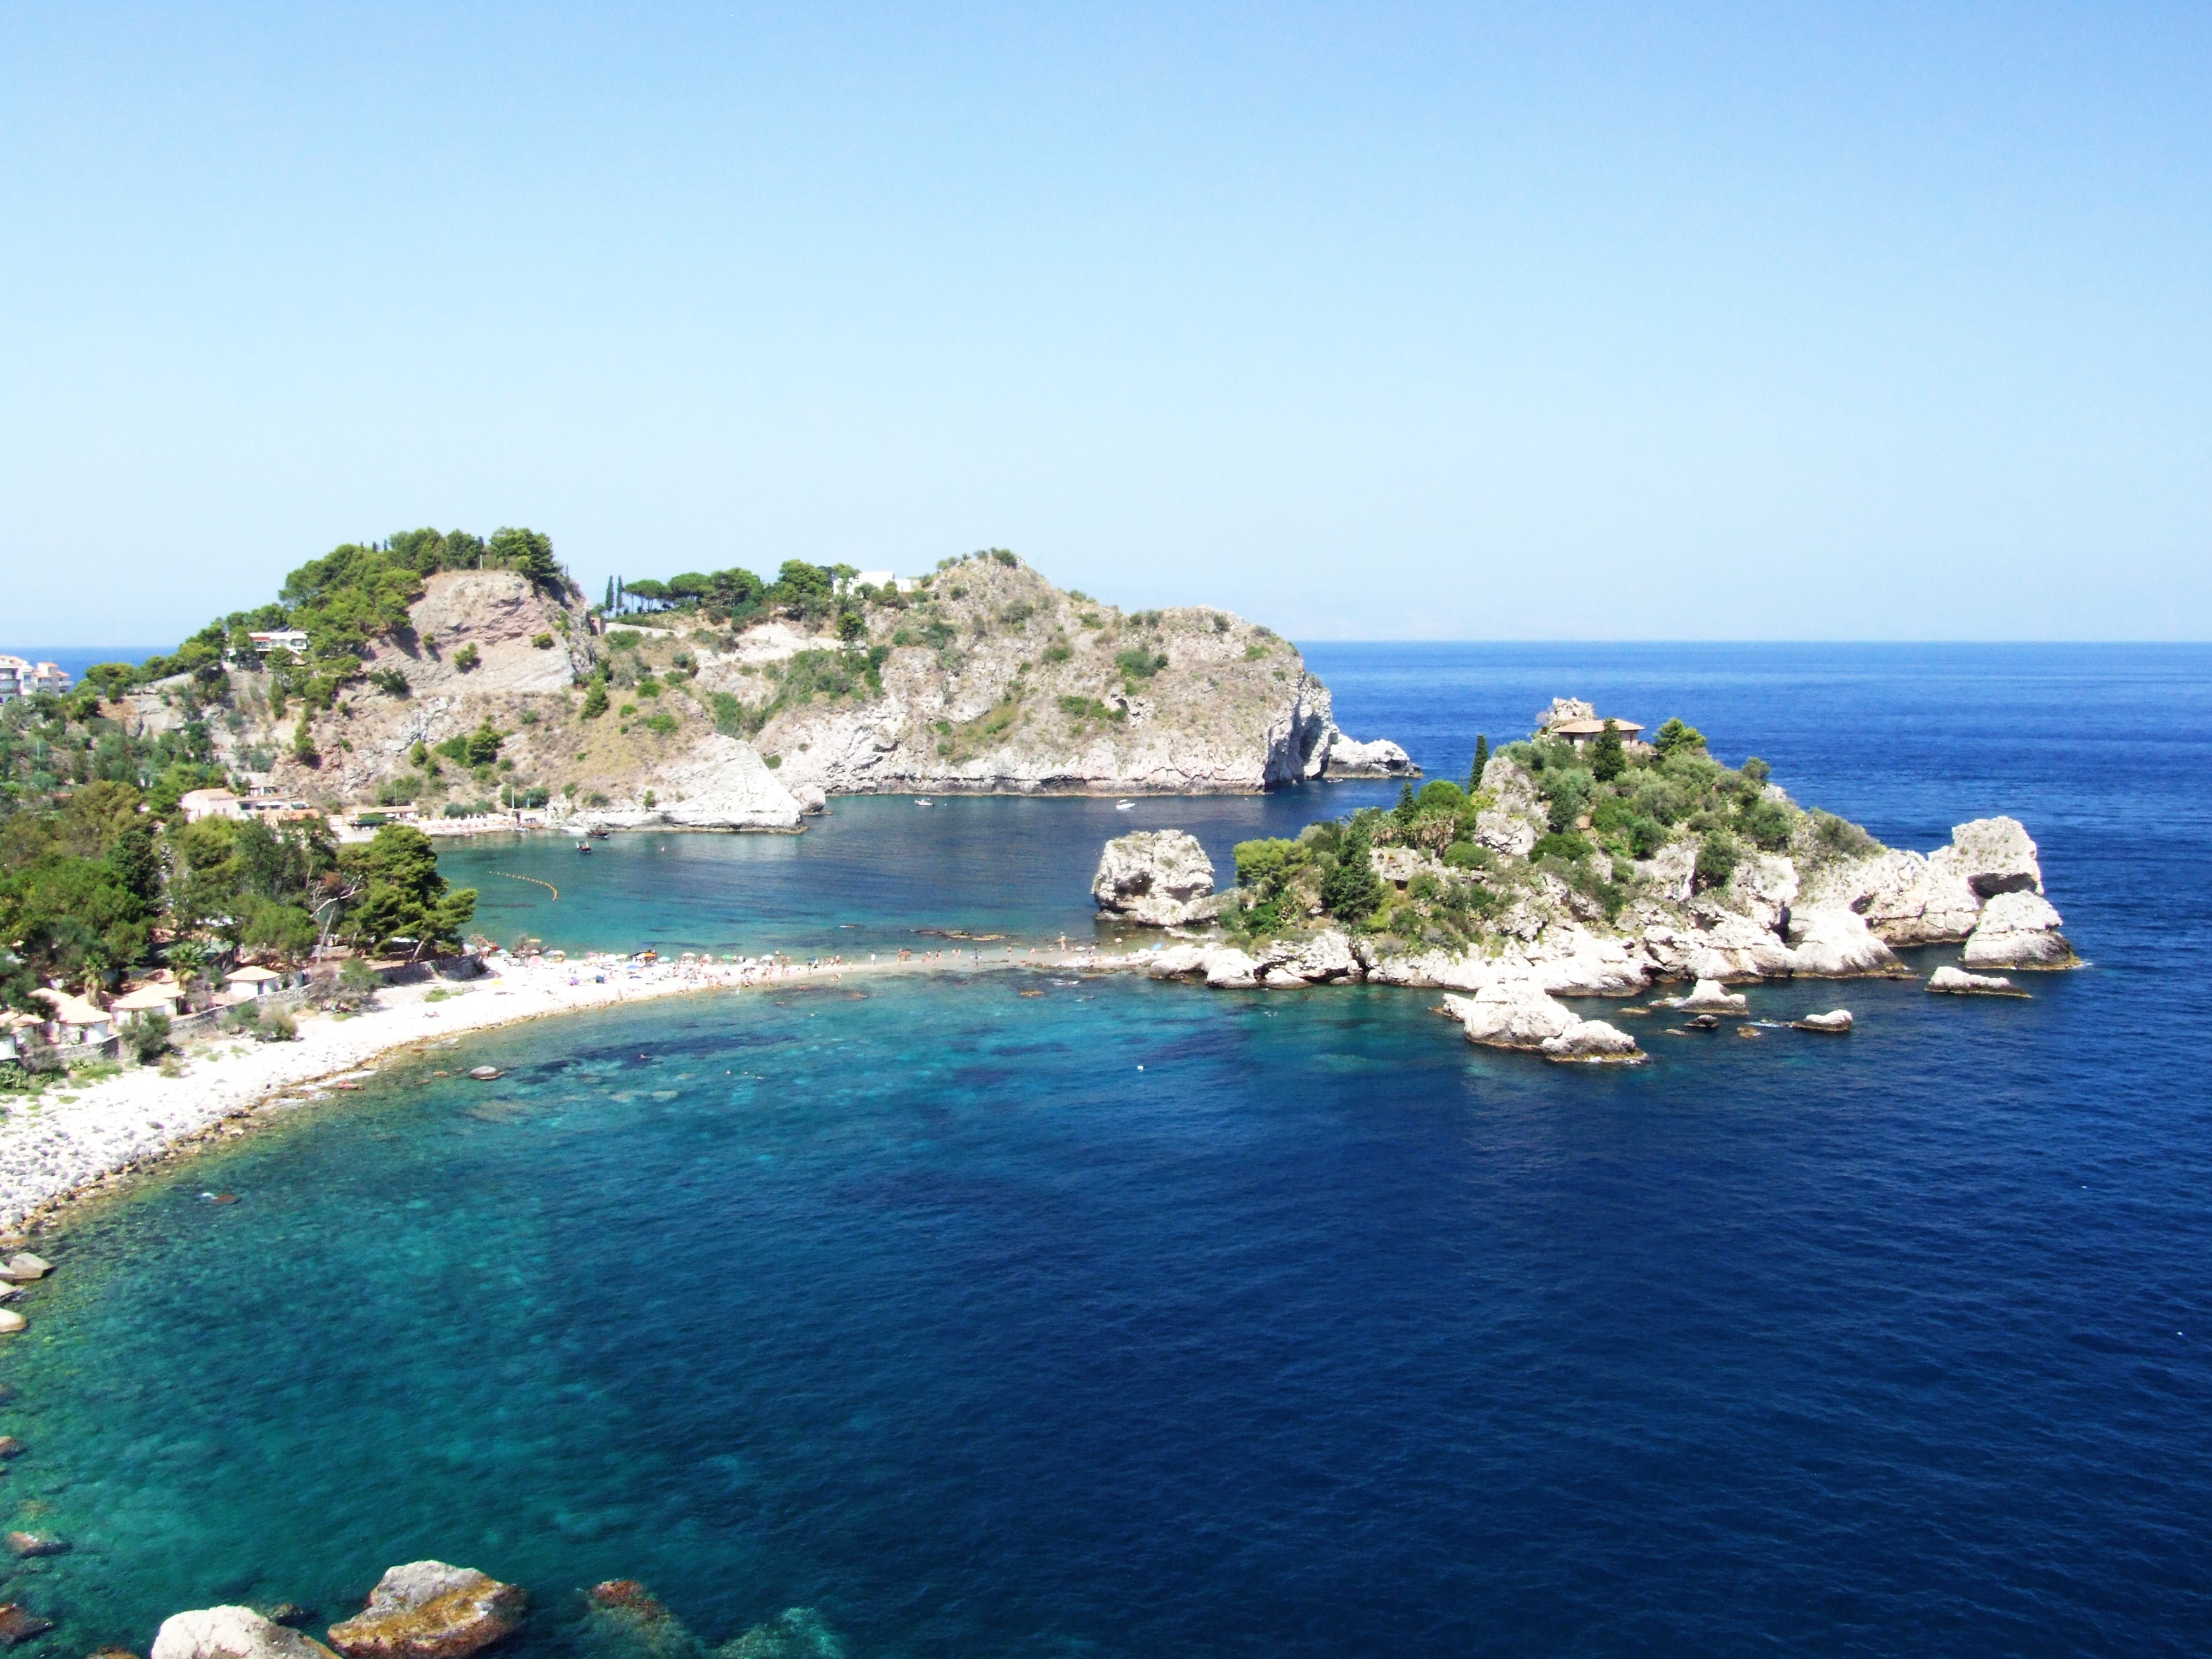 Isola Bella-Taormina-Messina-Sicilia-Italy - Creative Commons by gnuckx, Bebo, Reef, Notizie, Oggi, HQ Photo